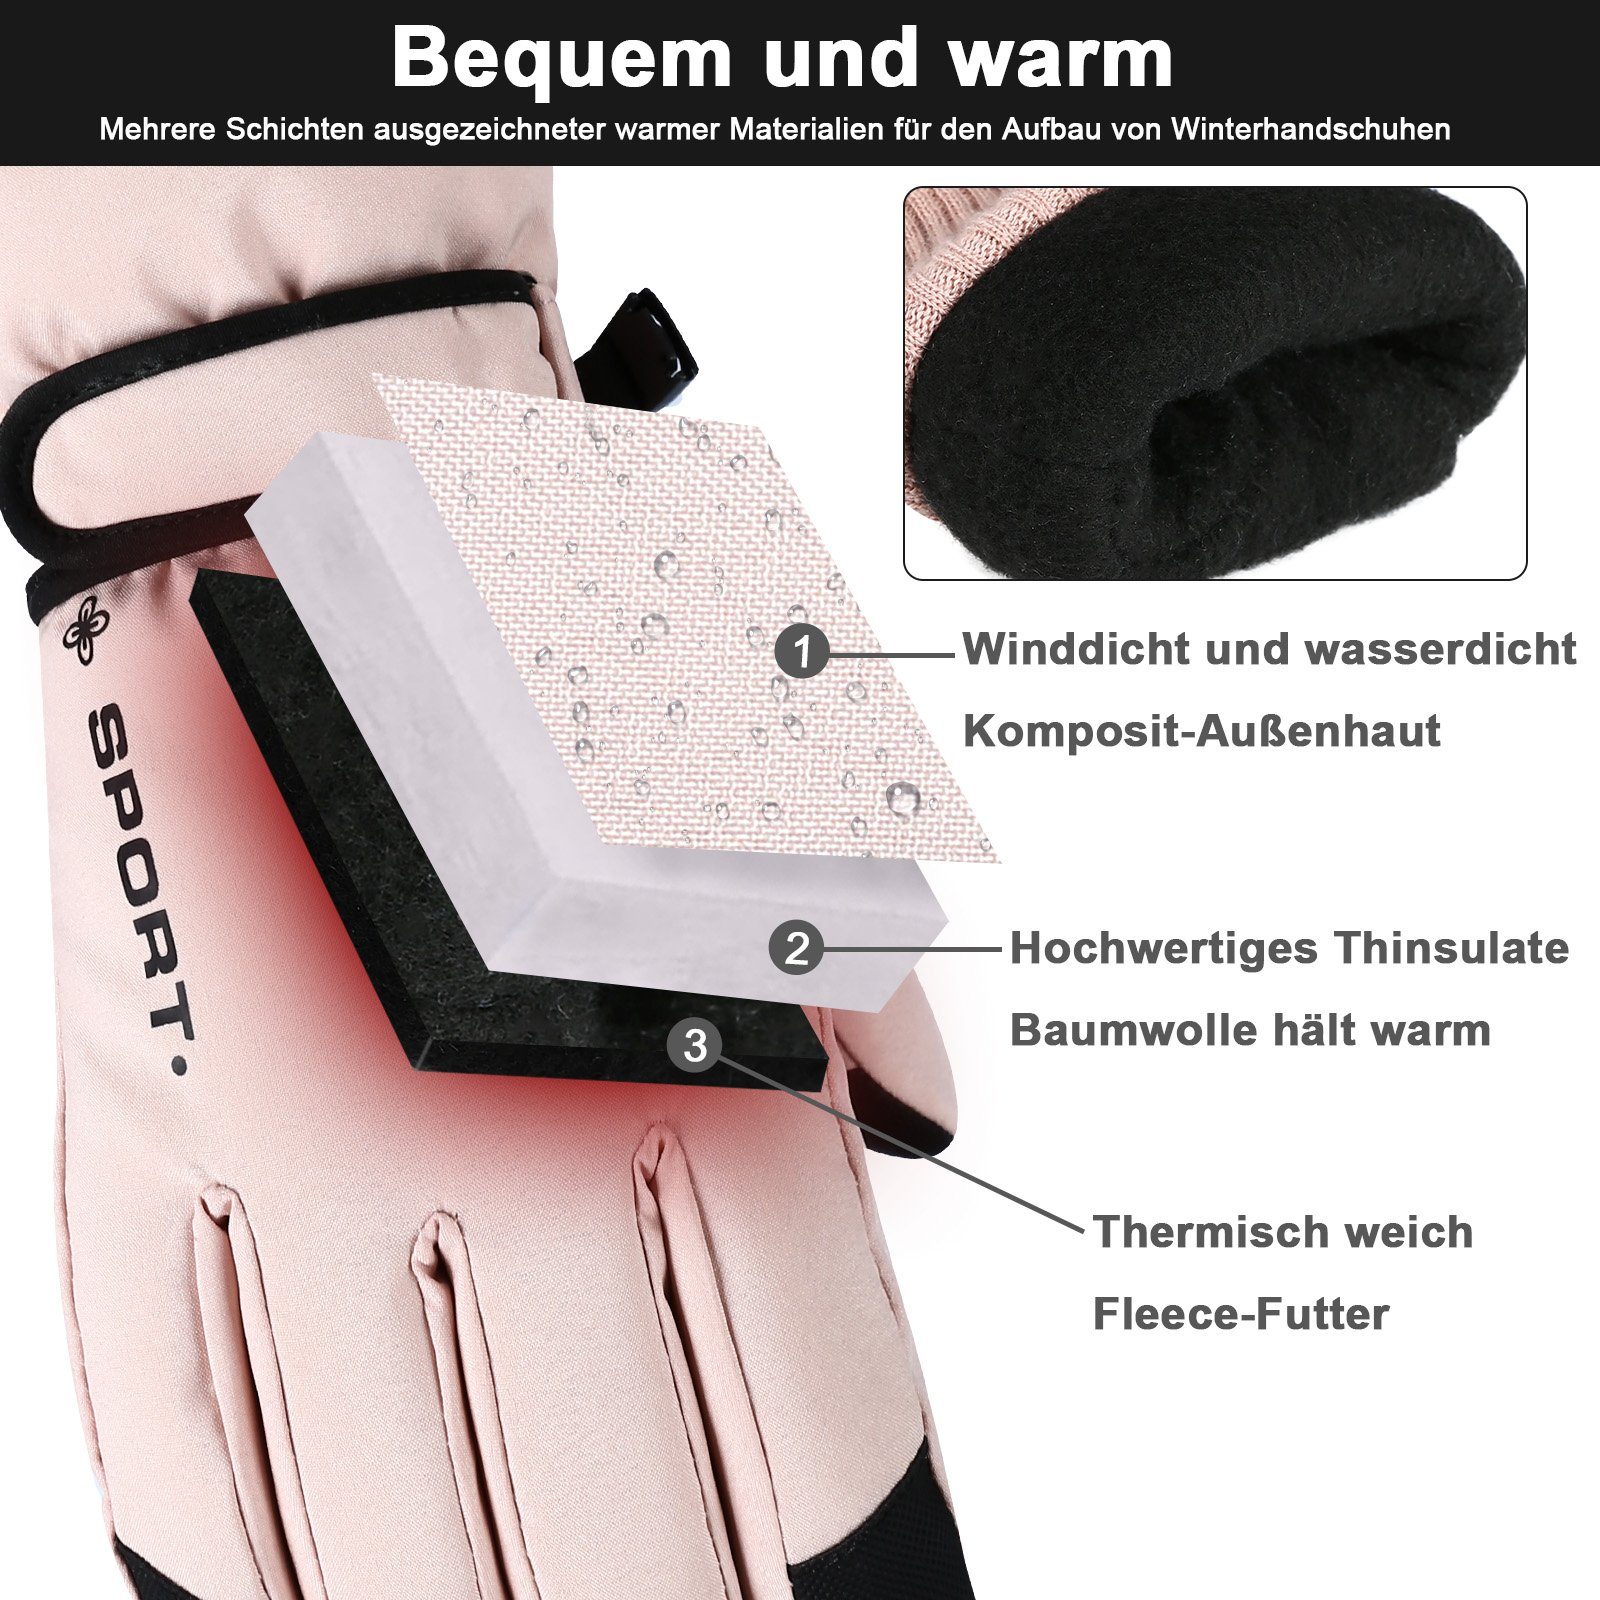 Winterhandschuhe,Damen Winddicht Wasserdichte Wasserdich Handschuhe BTTO Rosa Skihandschuhe, Touchscreen und Fahrradhandschuhe Skihandschuhe rutschfest